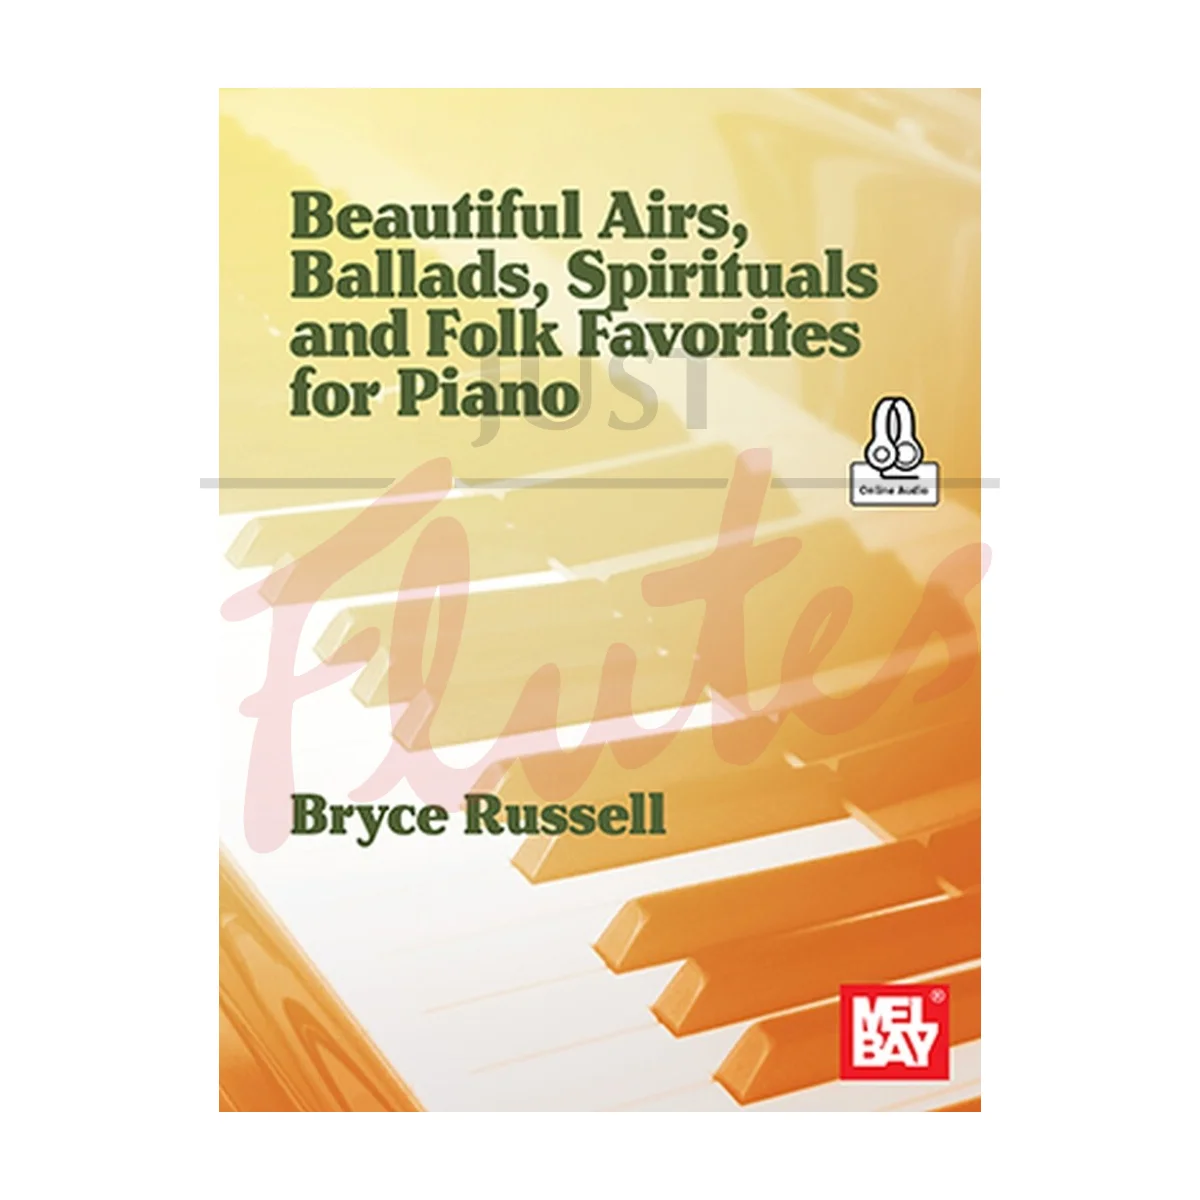 Beautiful Airs, Ballads, Spirituals and Folk Favorites for Piano